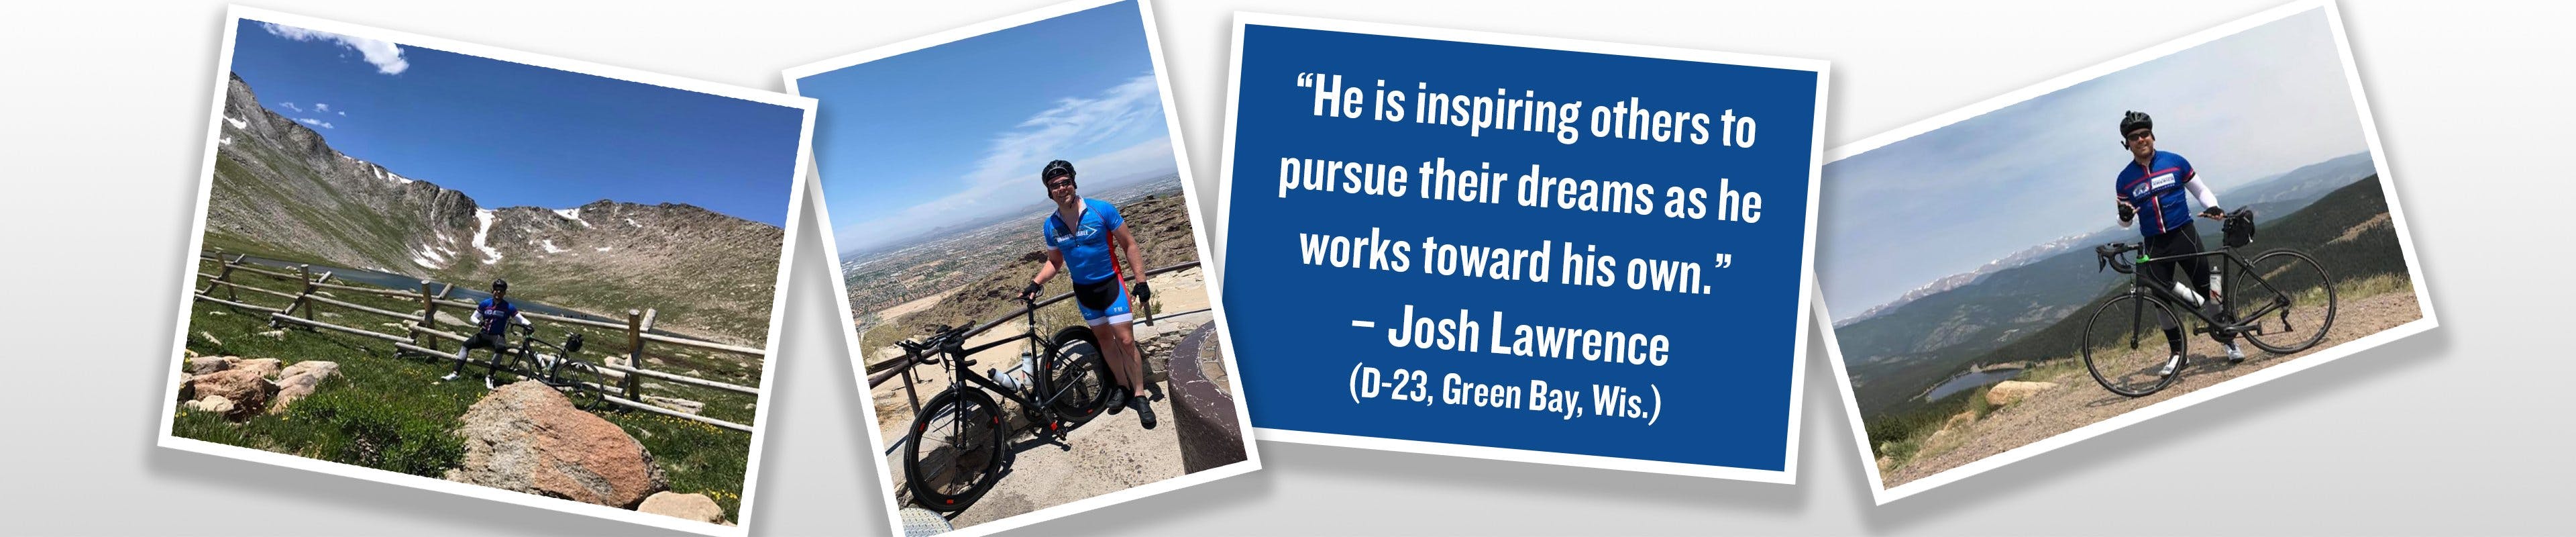 Josh Lawrence quote mountain biking on rural trail